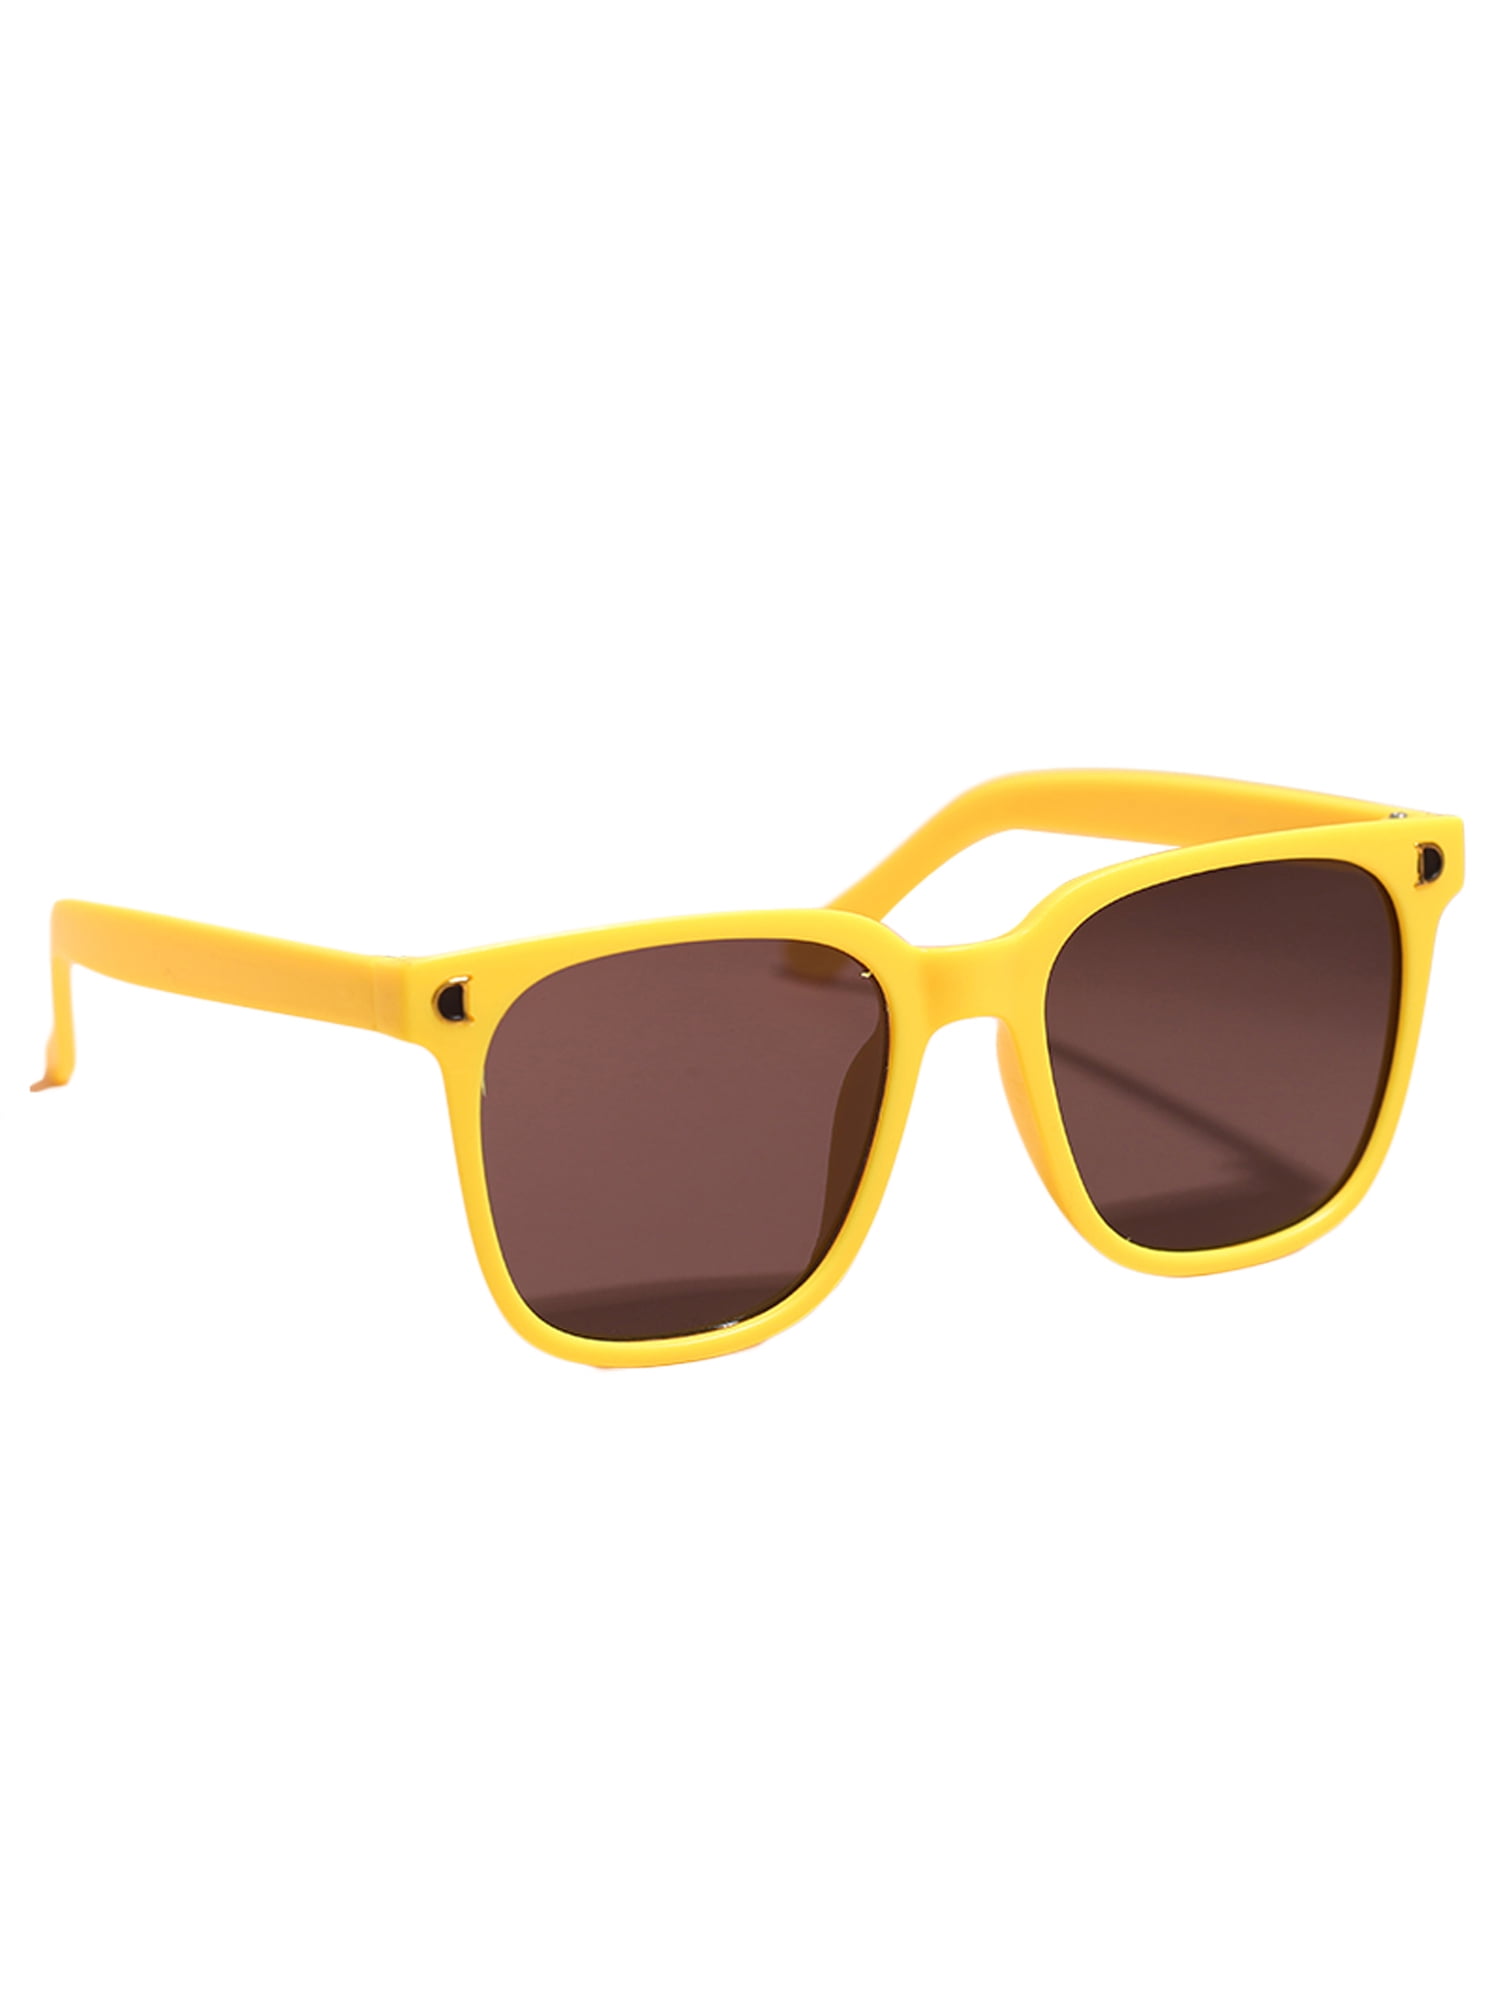 Accessoires Zonnebrillen & Eyewear Brillenstandaarden Happy Yellow Cat Eyeglass Holder 